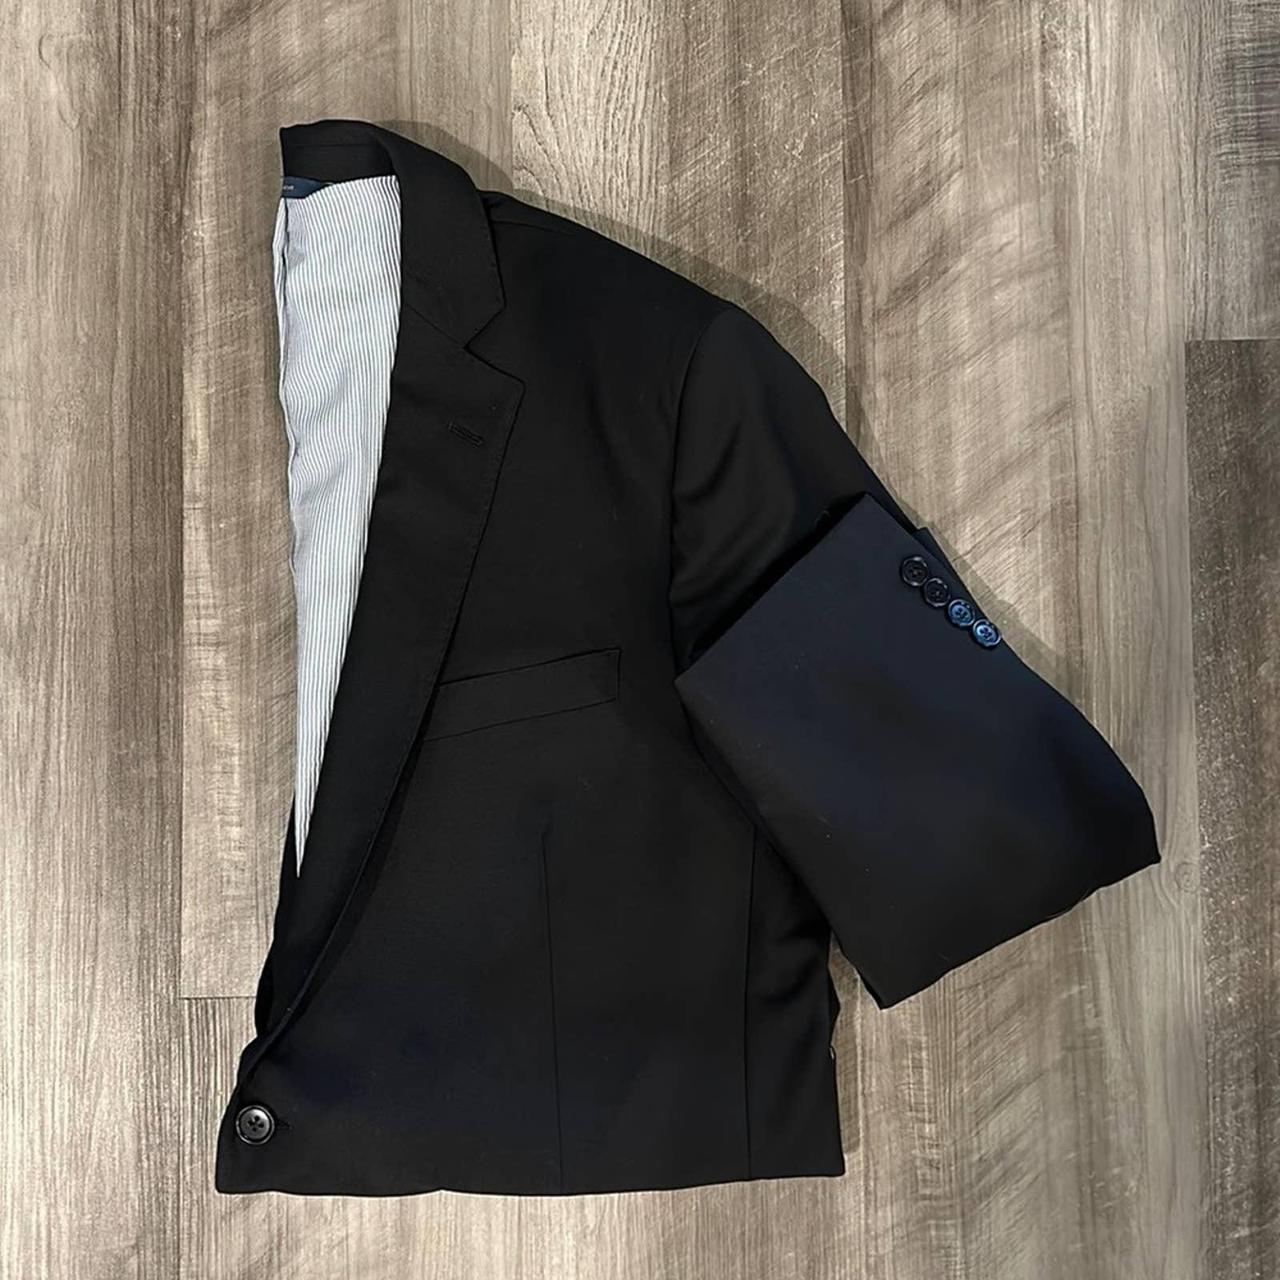 Brooks Brothers, Blazer/Tailored Jacket